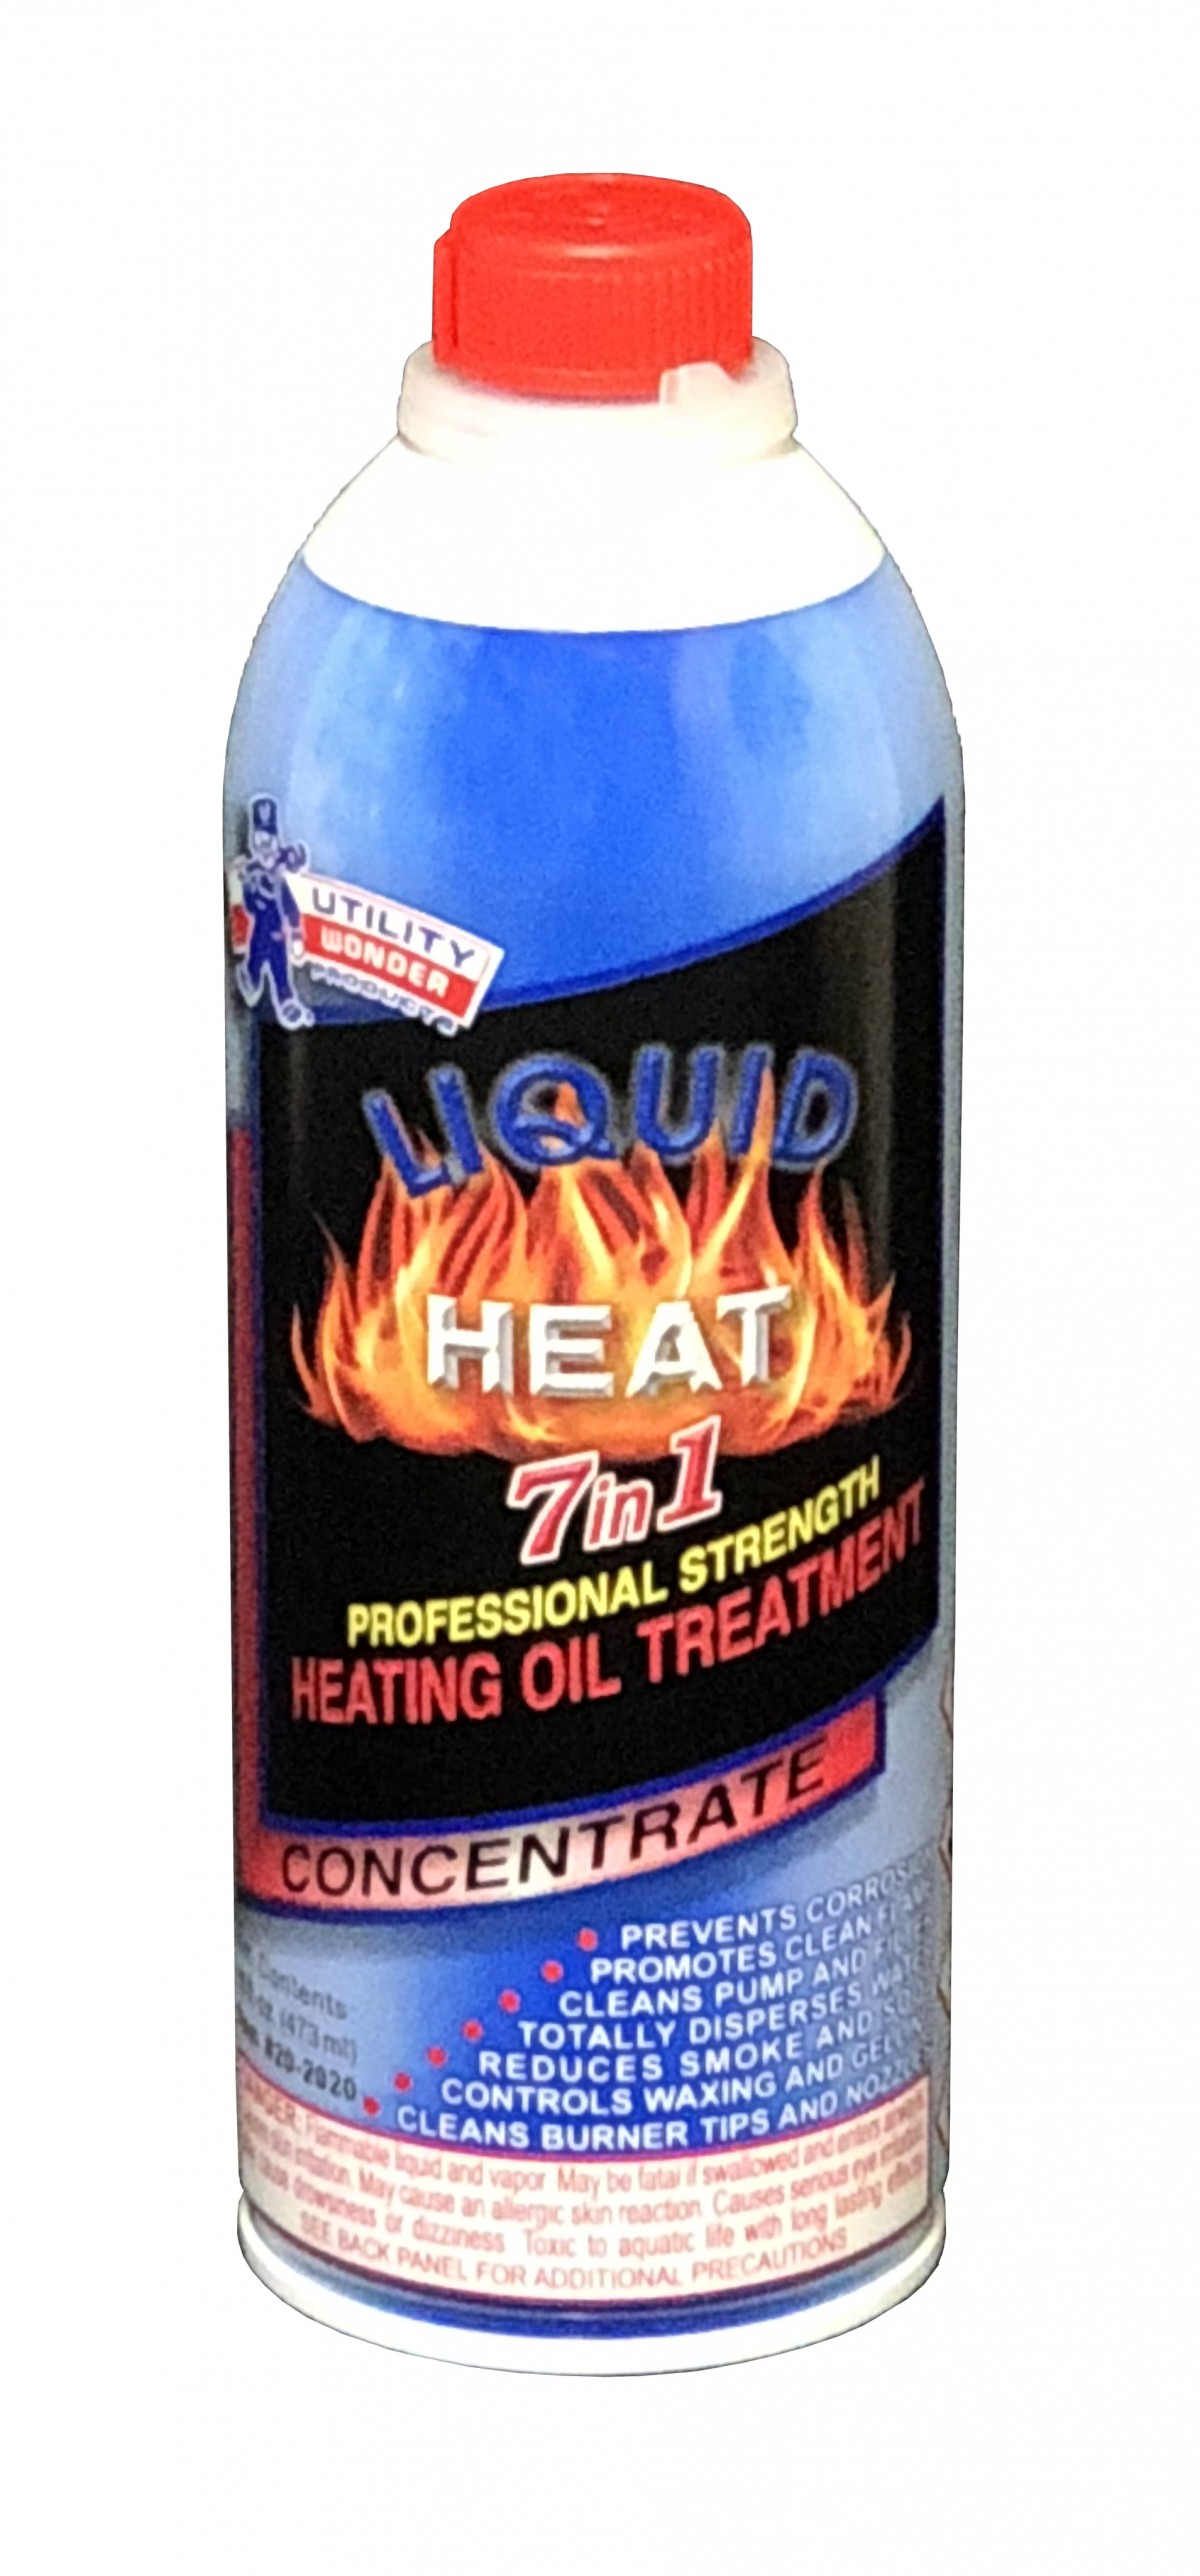 LIQUID HEAT HEATING OIL TREATMENT - Fuel Oil Conditioners, Deodorizers